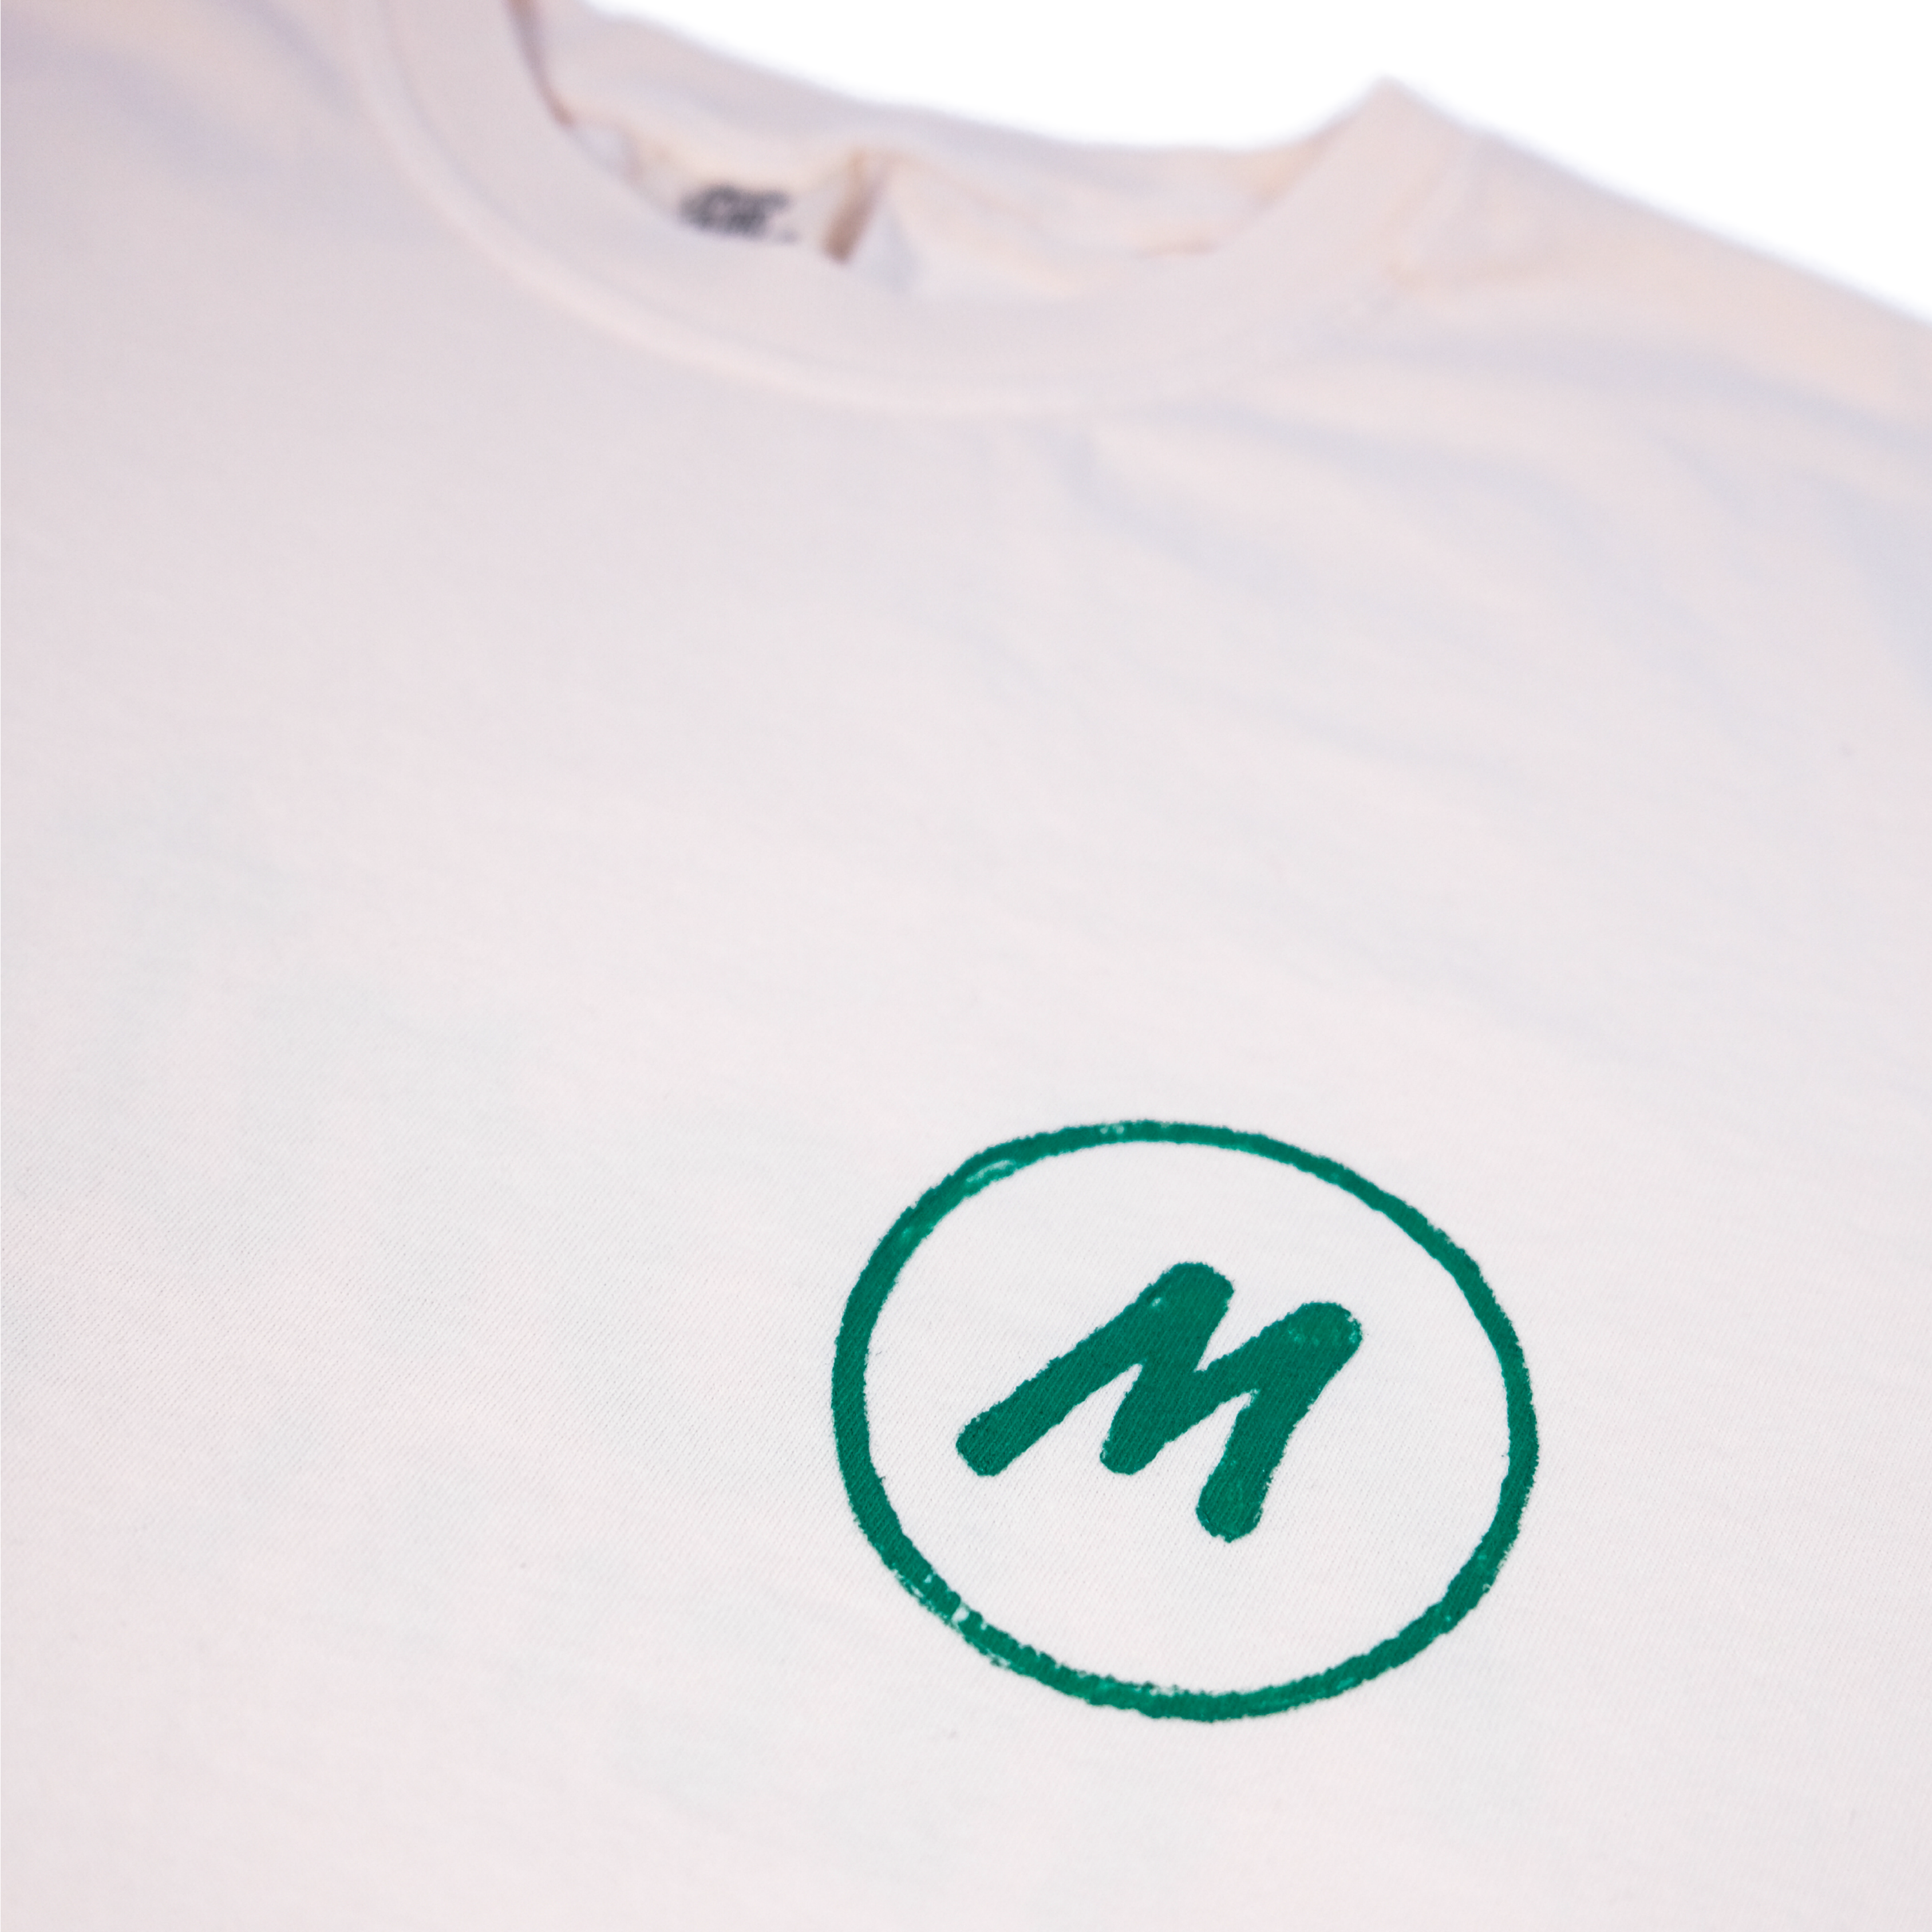 Monte's Social Club T-Shirt Green